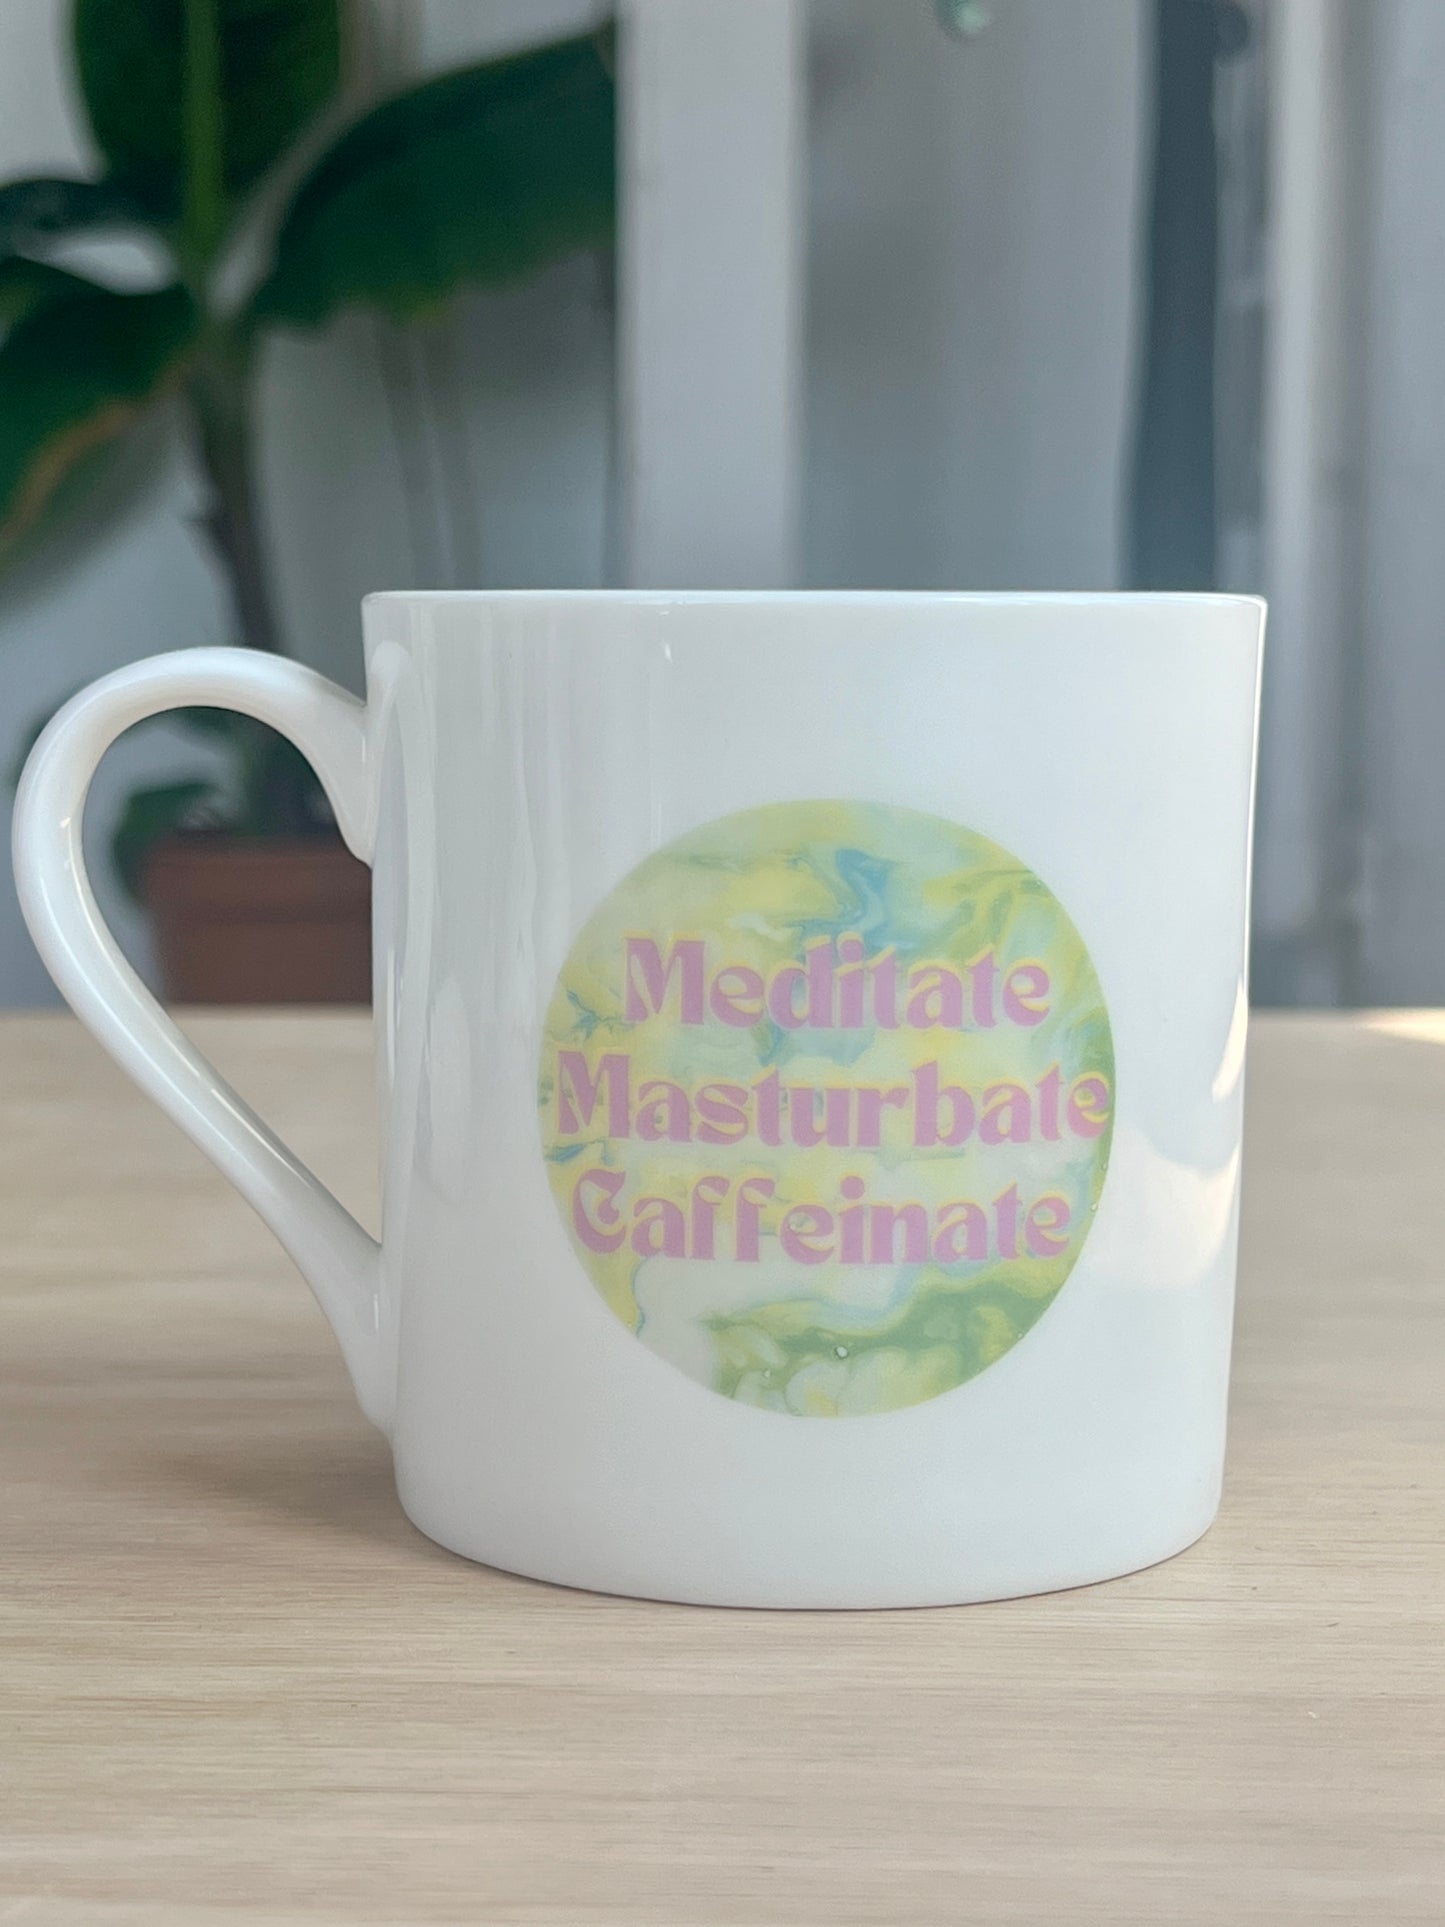 Meditate, Masturbate, Caffeinate Mug